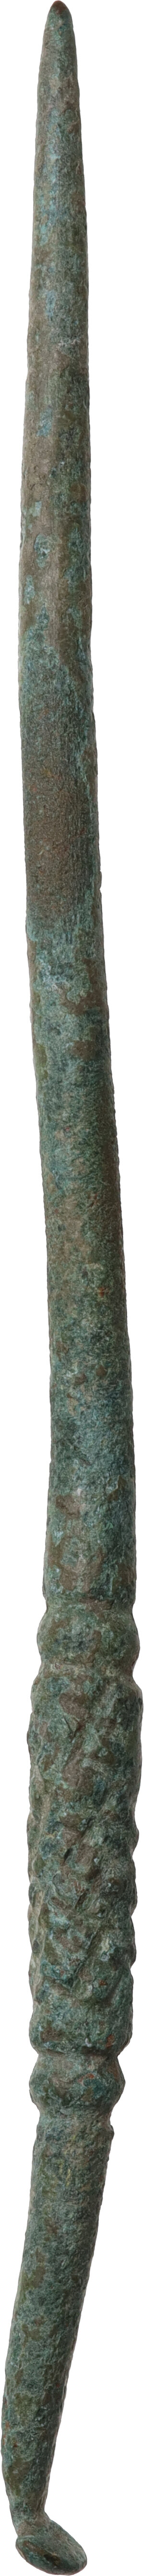 obverse: Bronze tool.  Roman period, 1st-3rd centuries AD